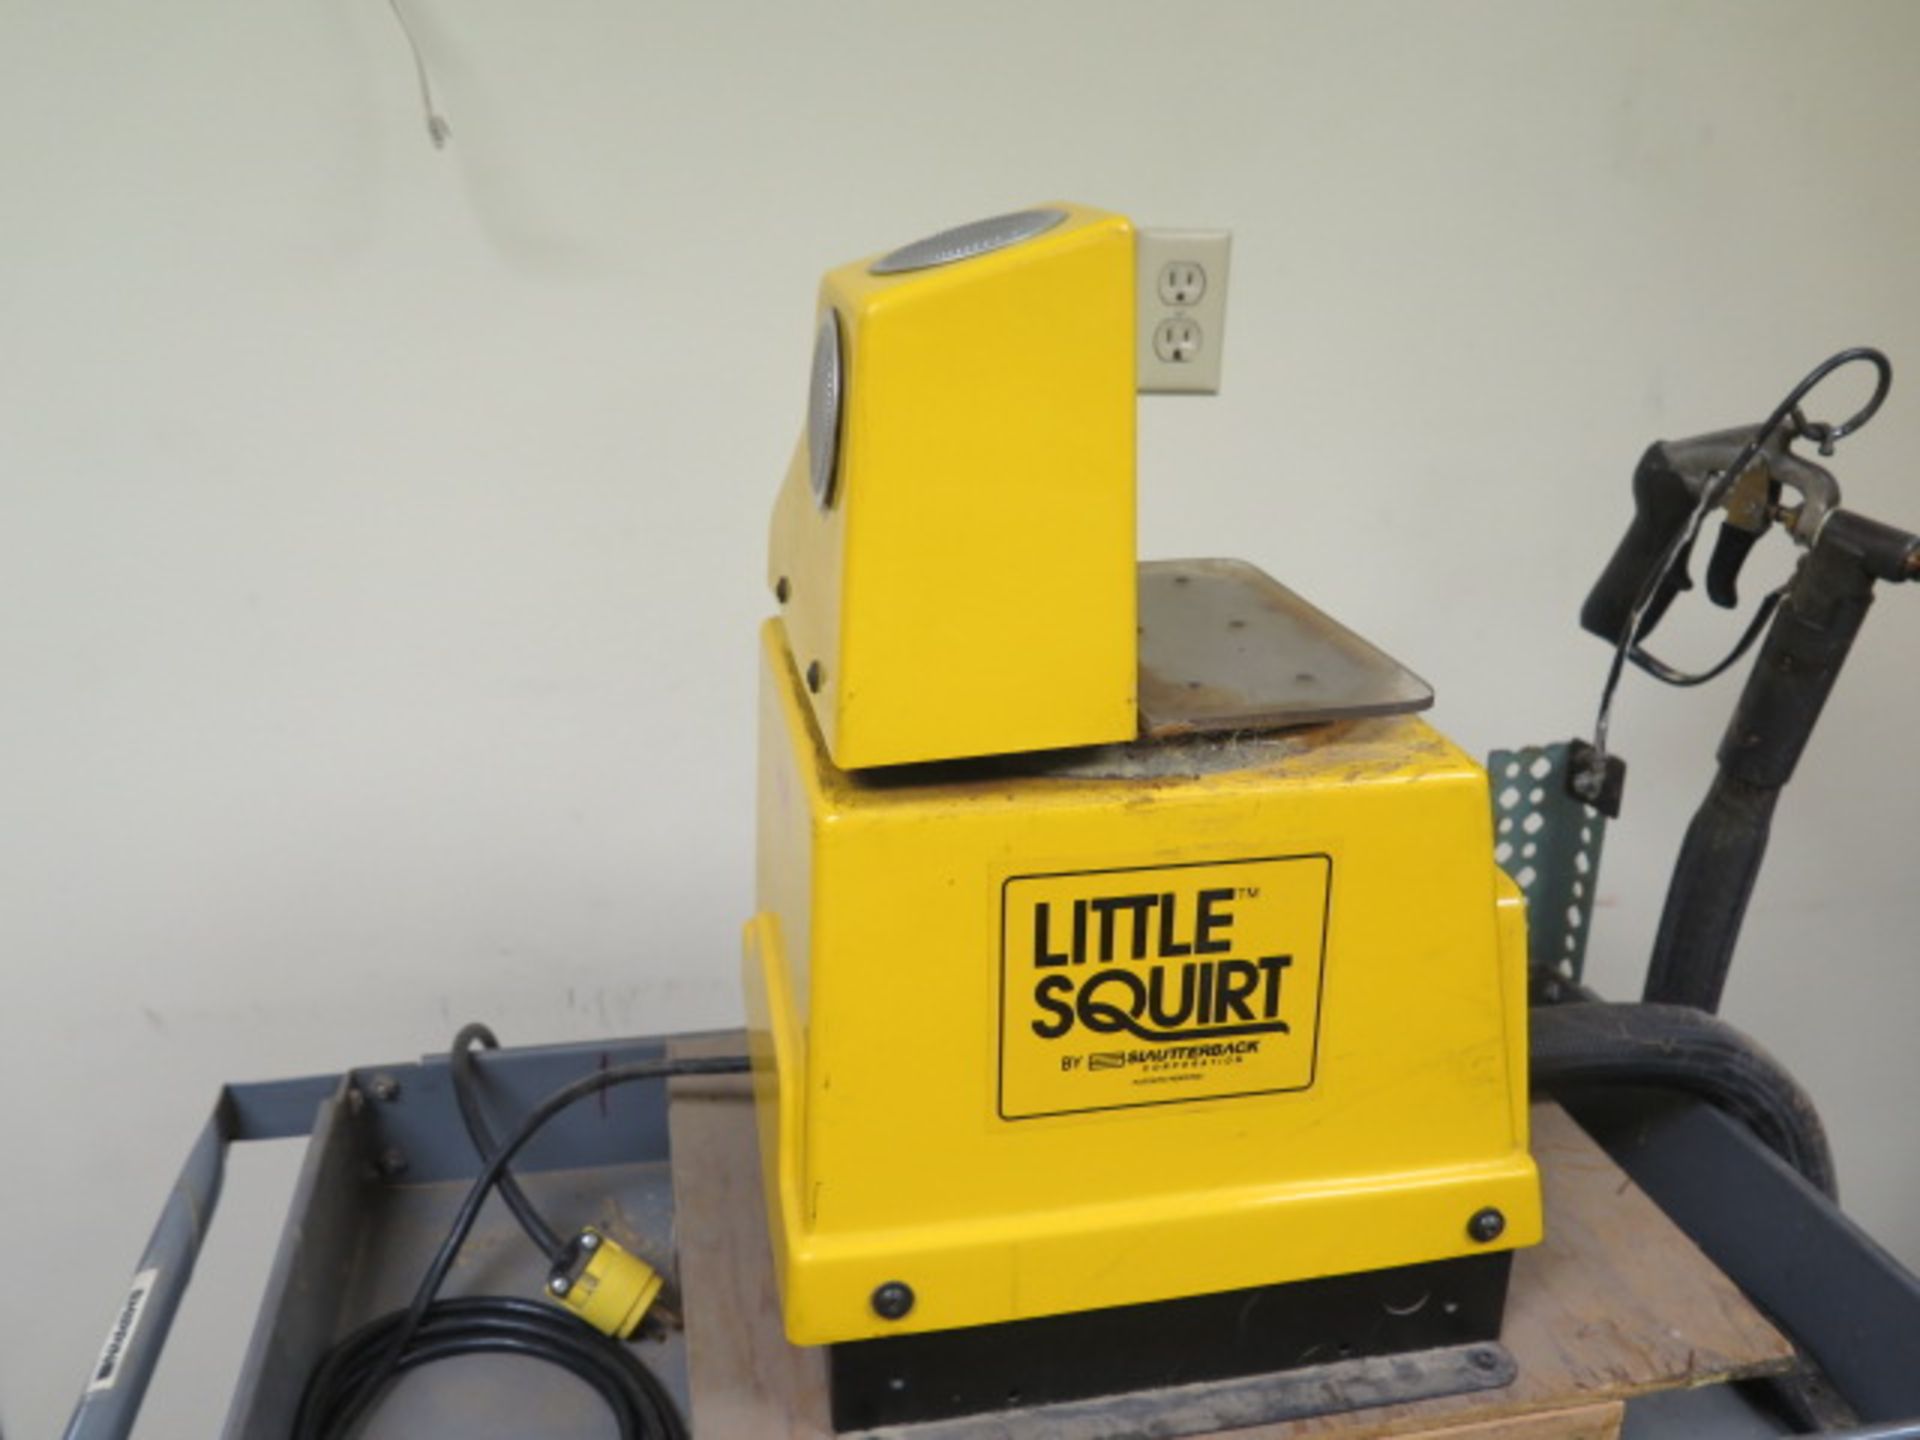 Slautterback “Little Squirt” Hot Glue Dispenser and Cart - Image 2 of 6